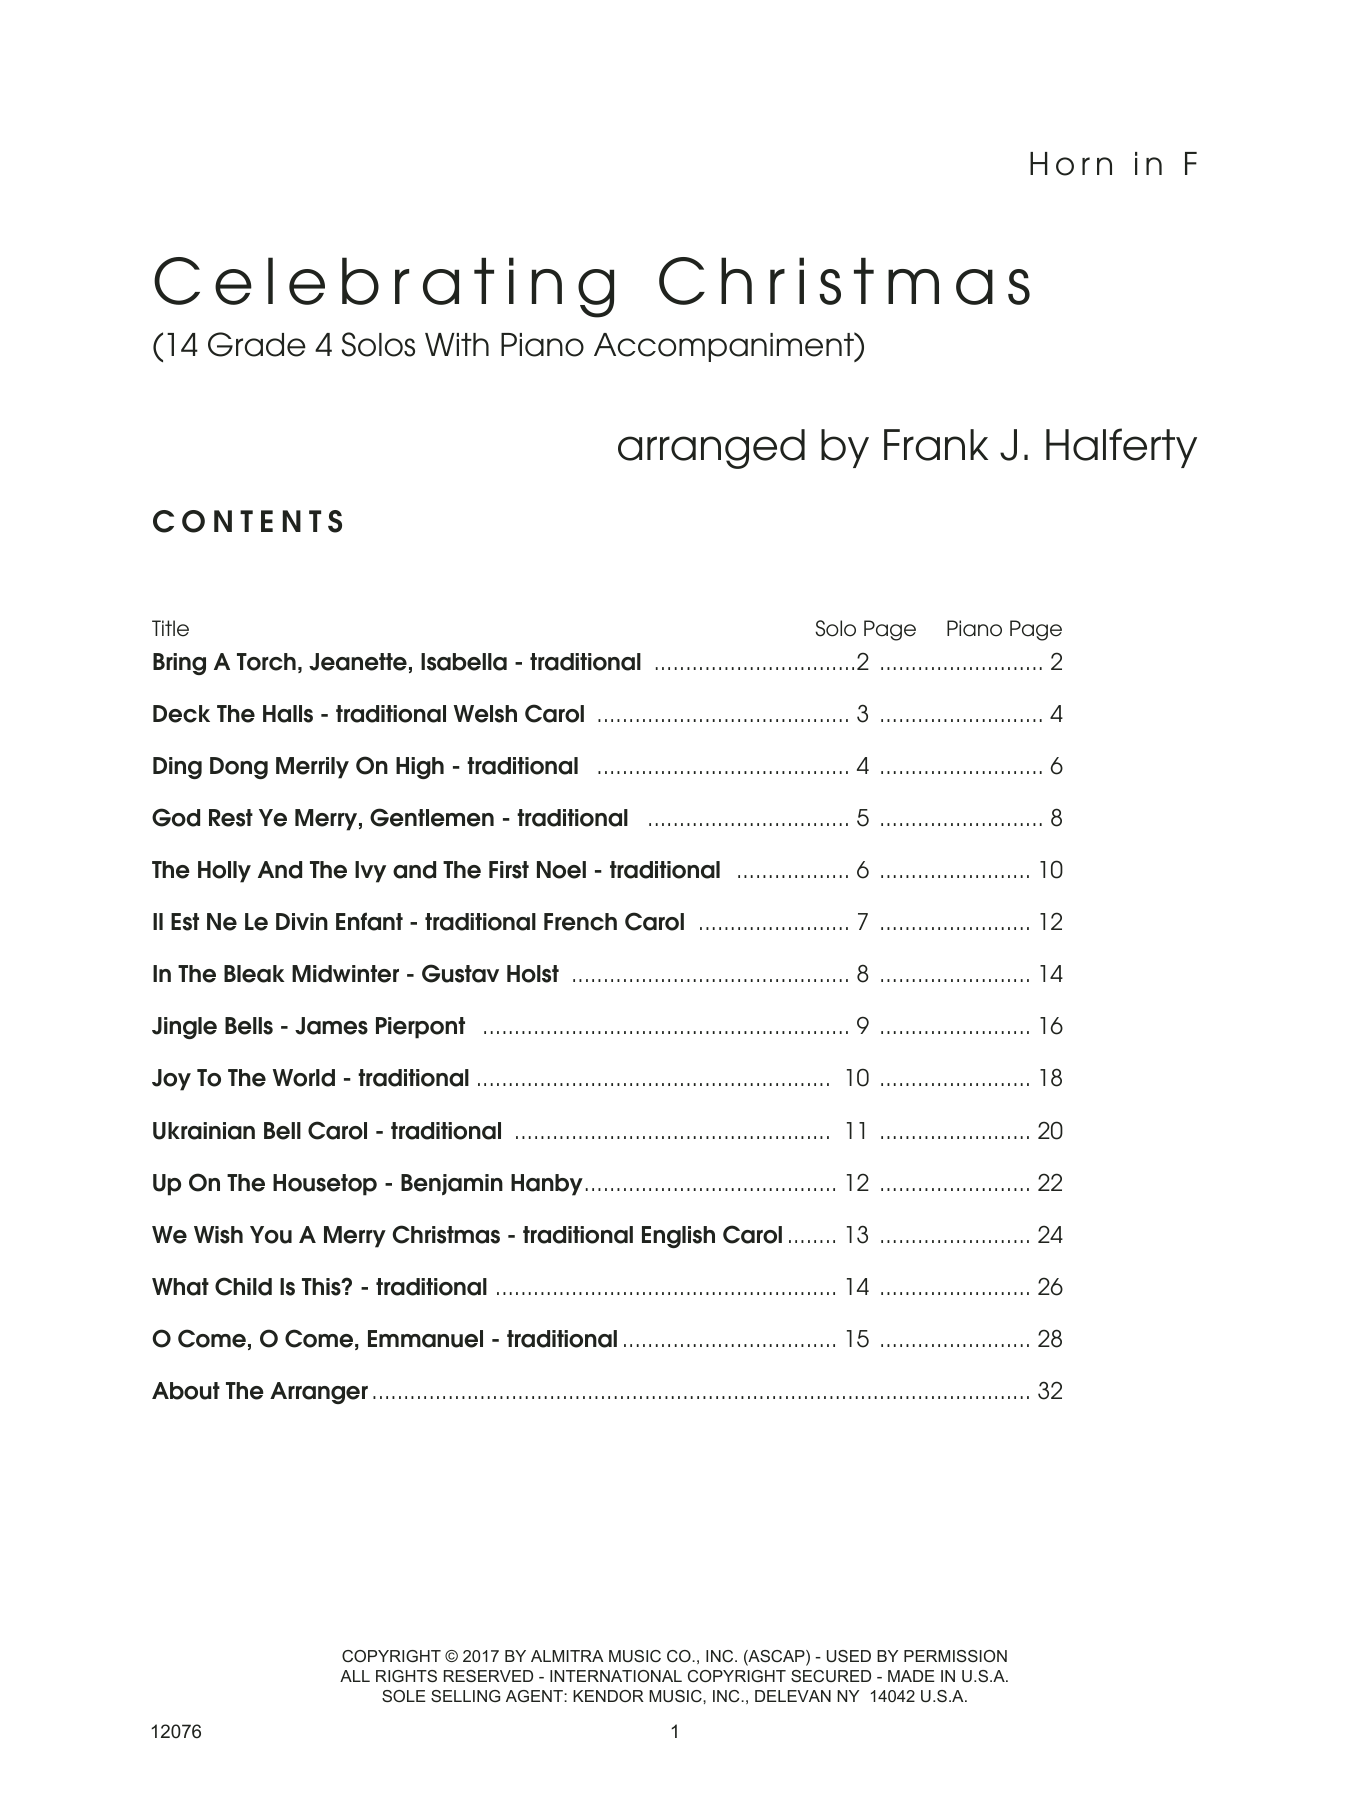 Celebrating Christmas (14 Grade 4 Solos With Piano Accompaniment) - Horn in F (Brass Solo) von Frank J. Halferty